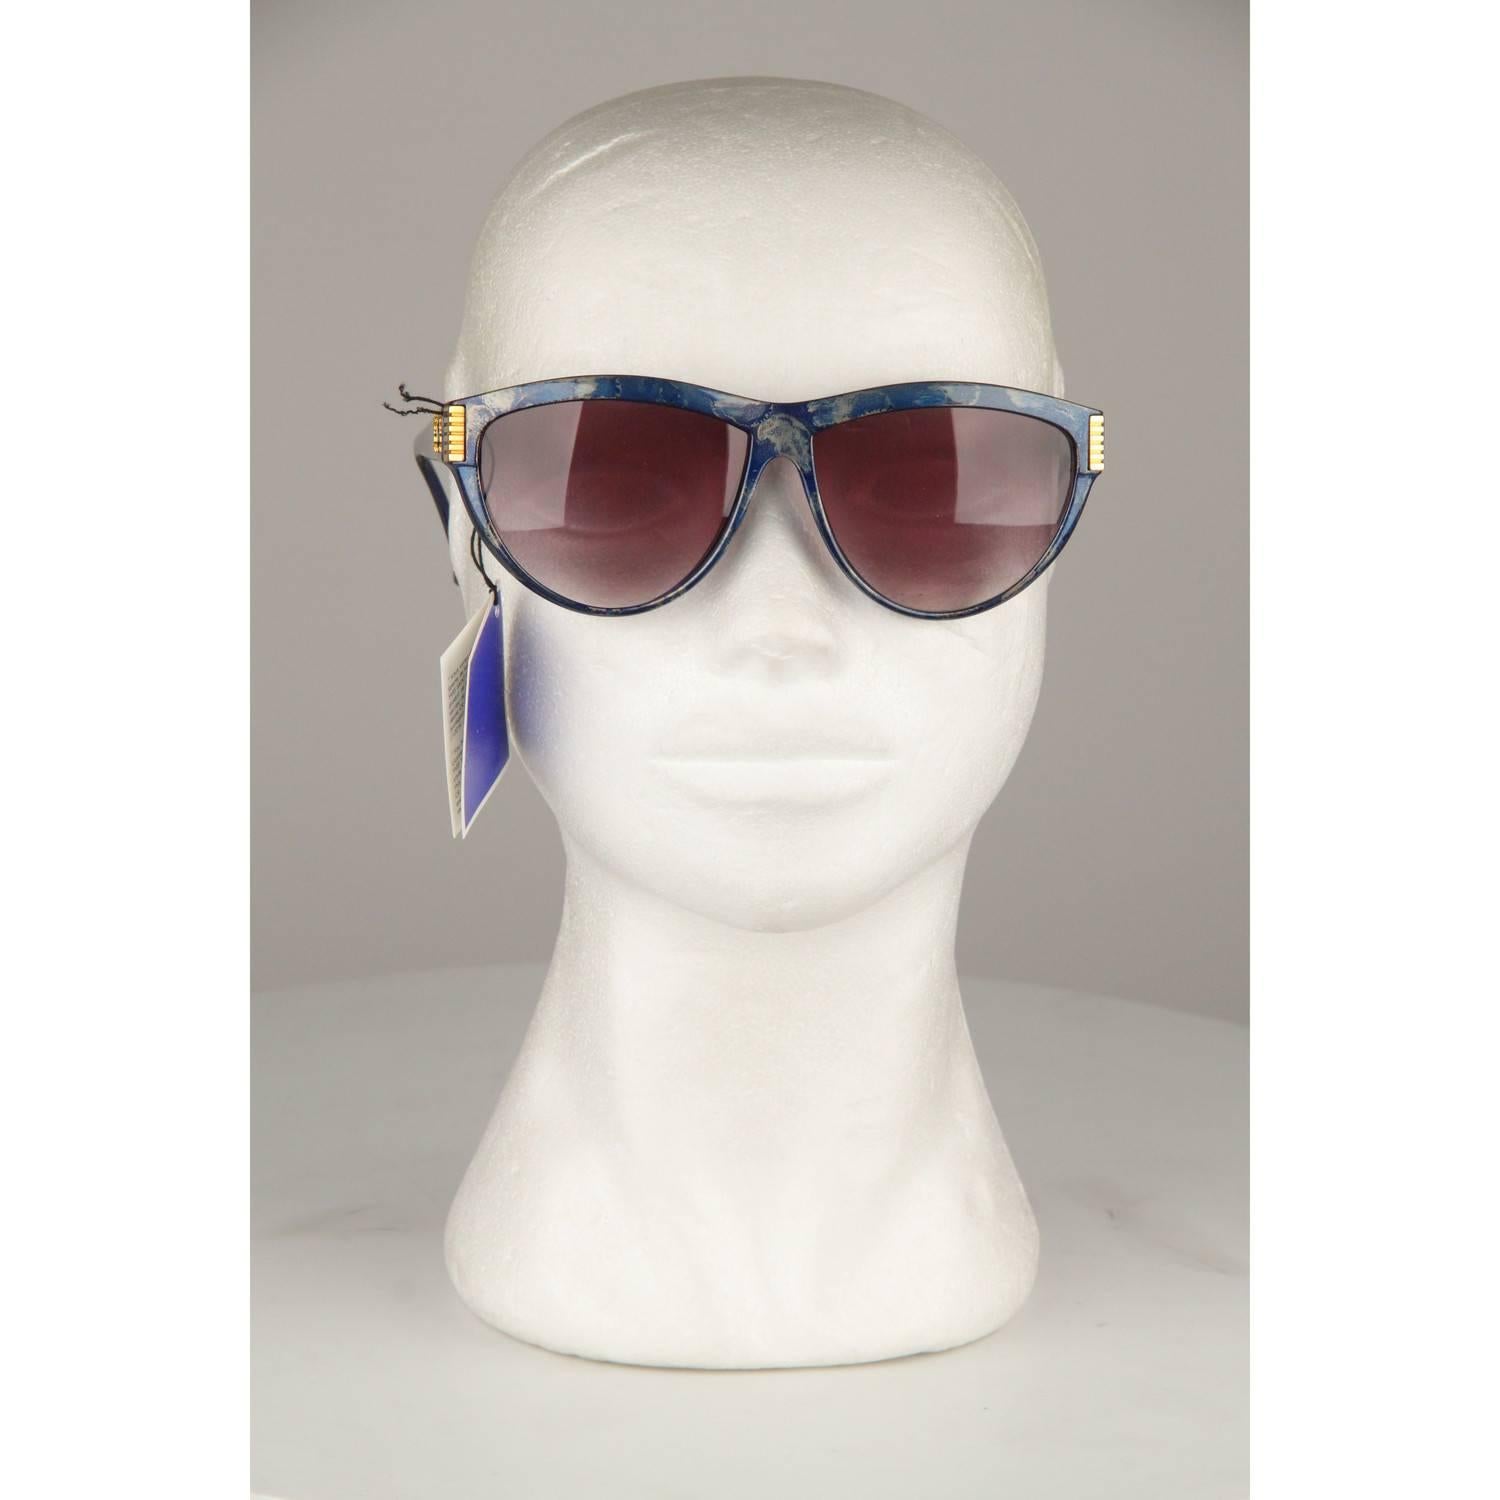 Yves Saint Laurent Vintage Blue Marbled Sunglasses 9045 56mm New Old Stock 2